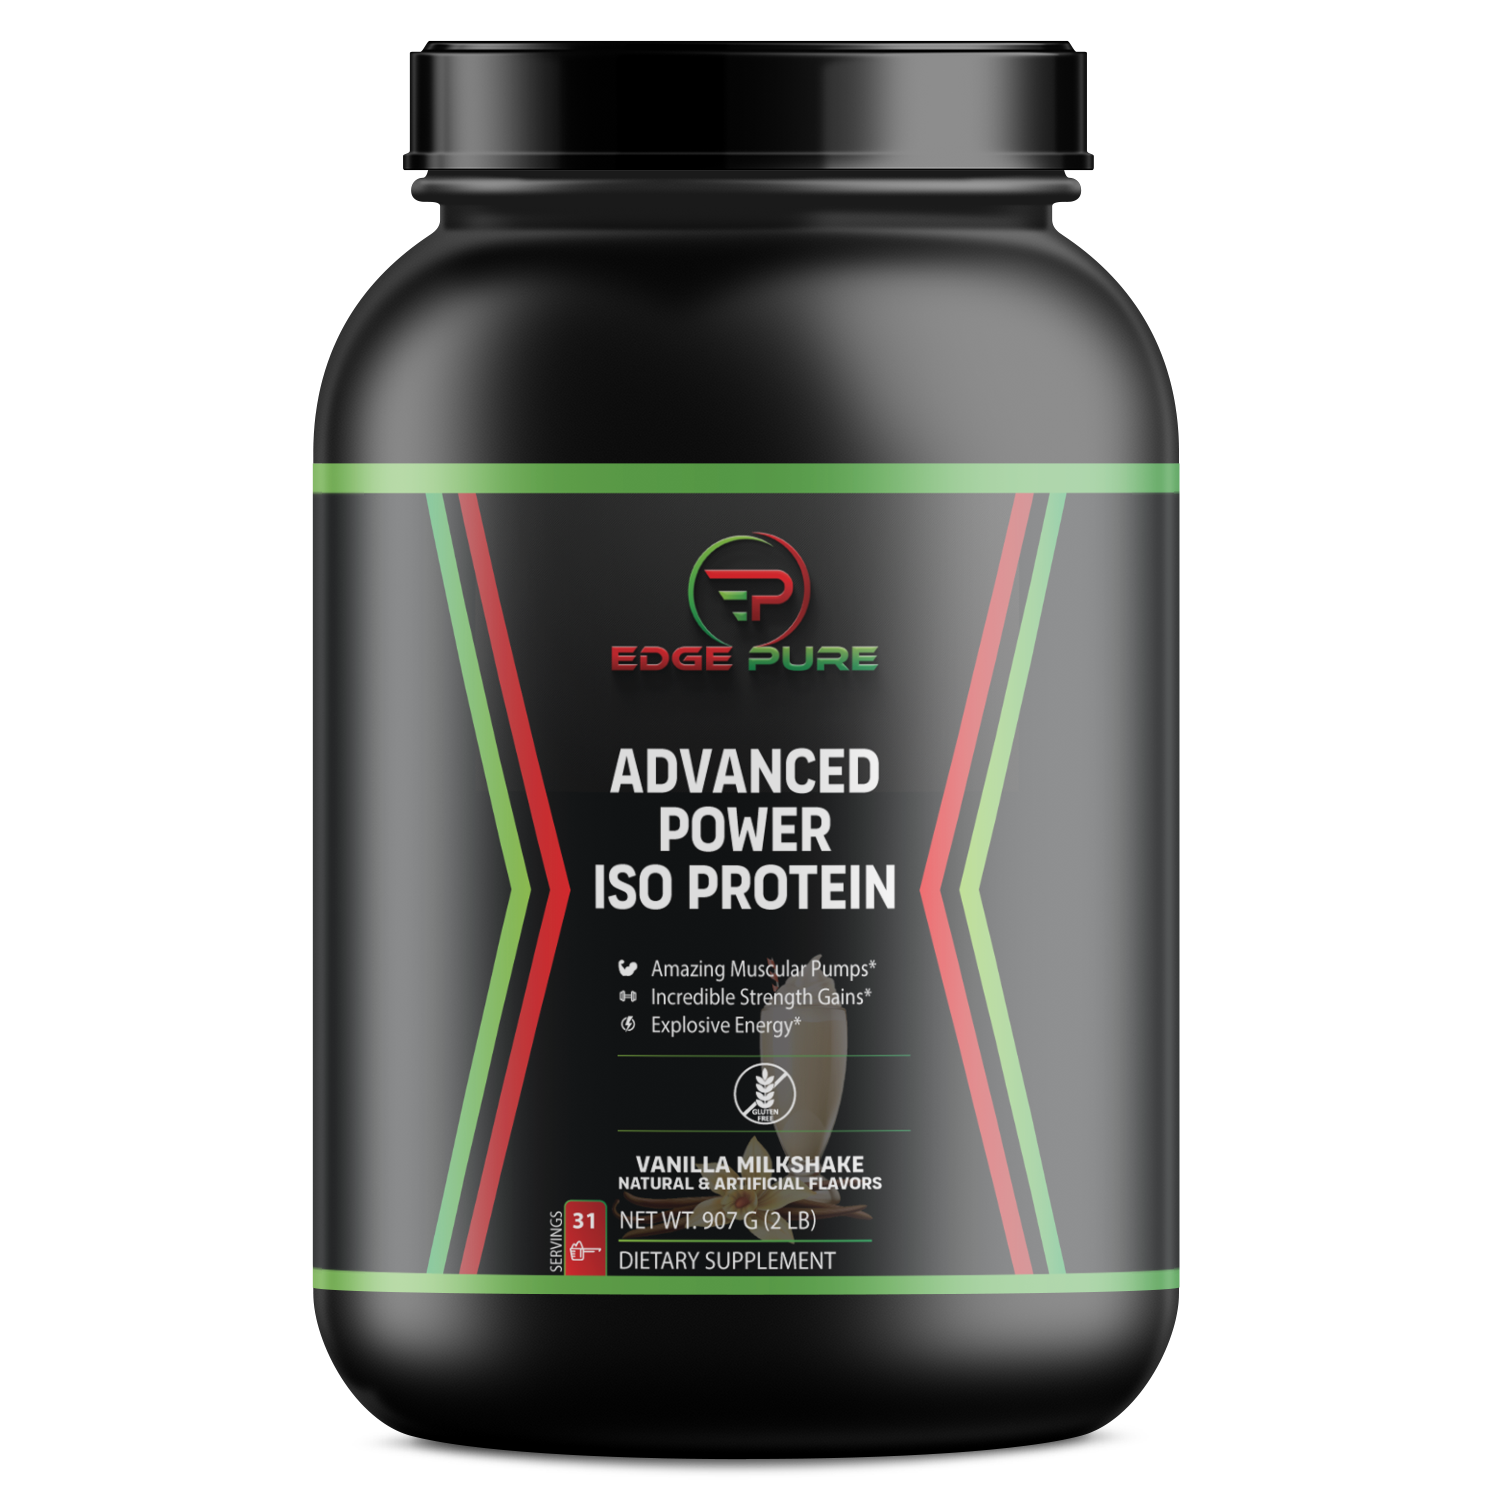 Advanced Power ISO Protein - Vanilla Milkshake (2lb) Edge Pure